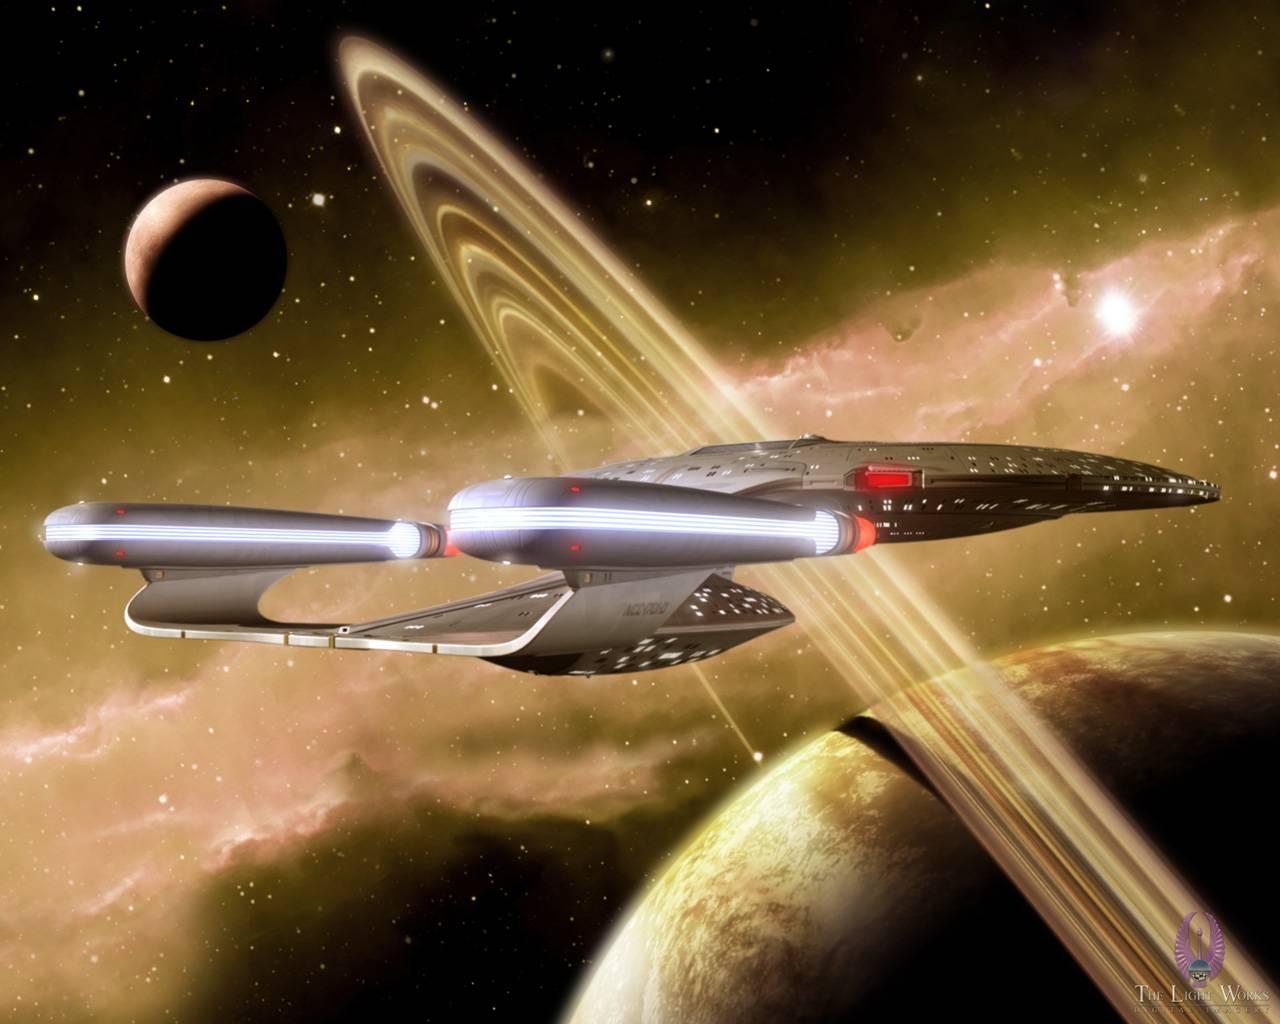 256 Star Trek: The Original Series HD Wallpapers | Backgrounds ...